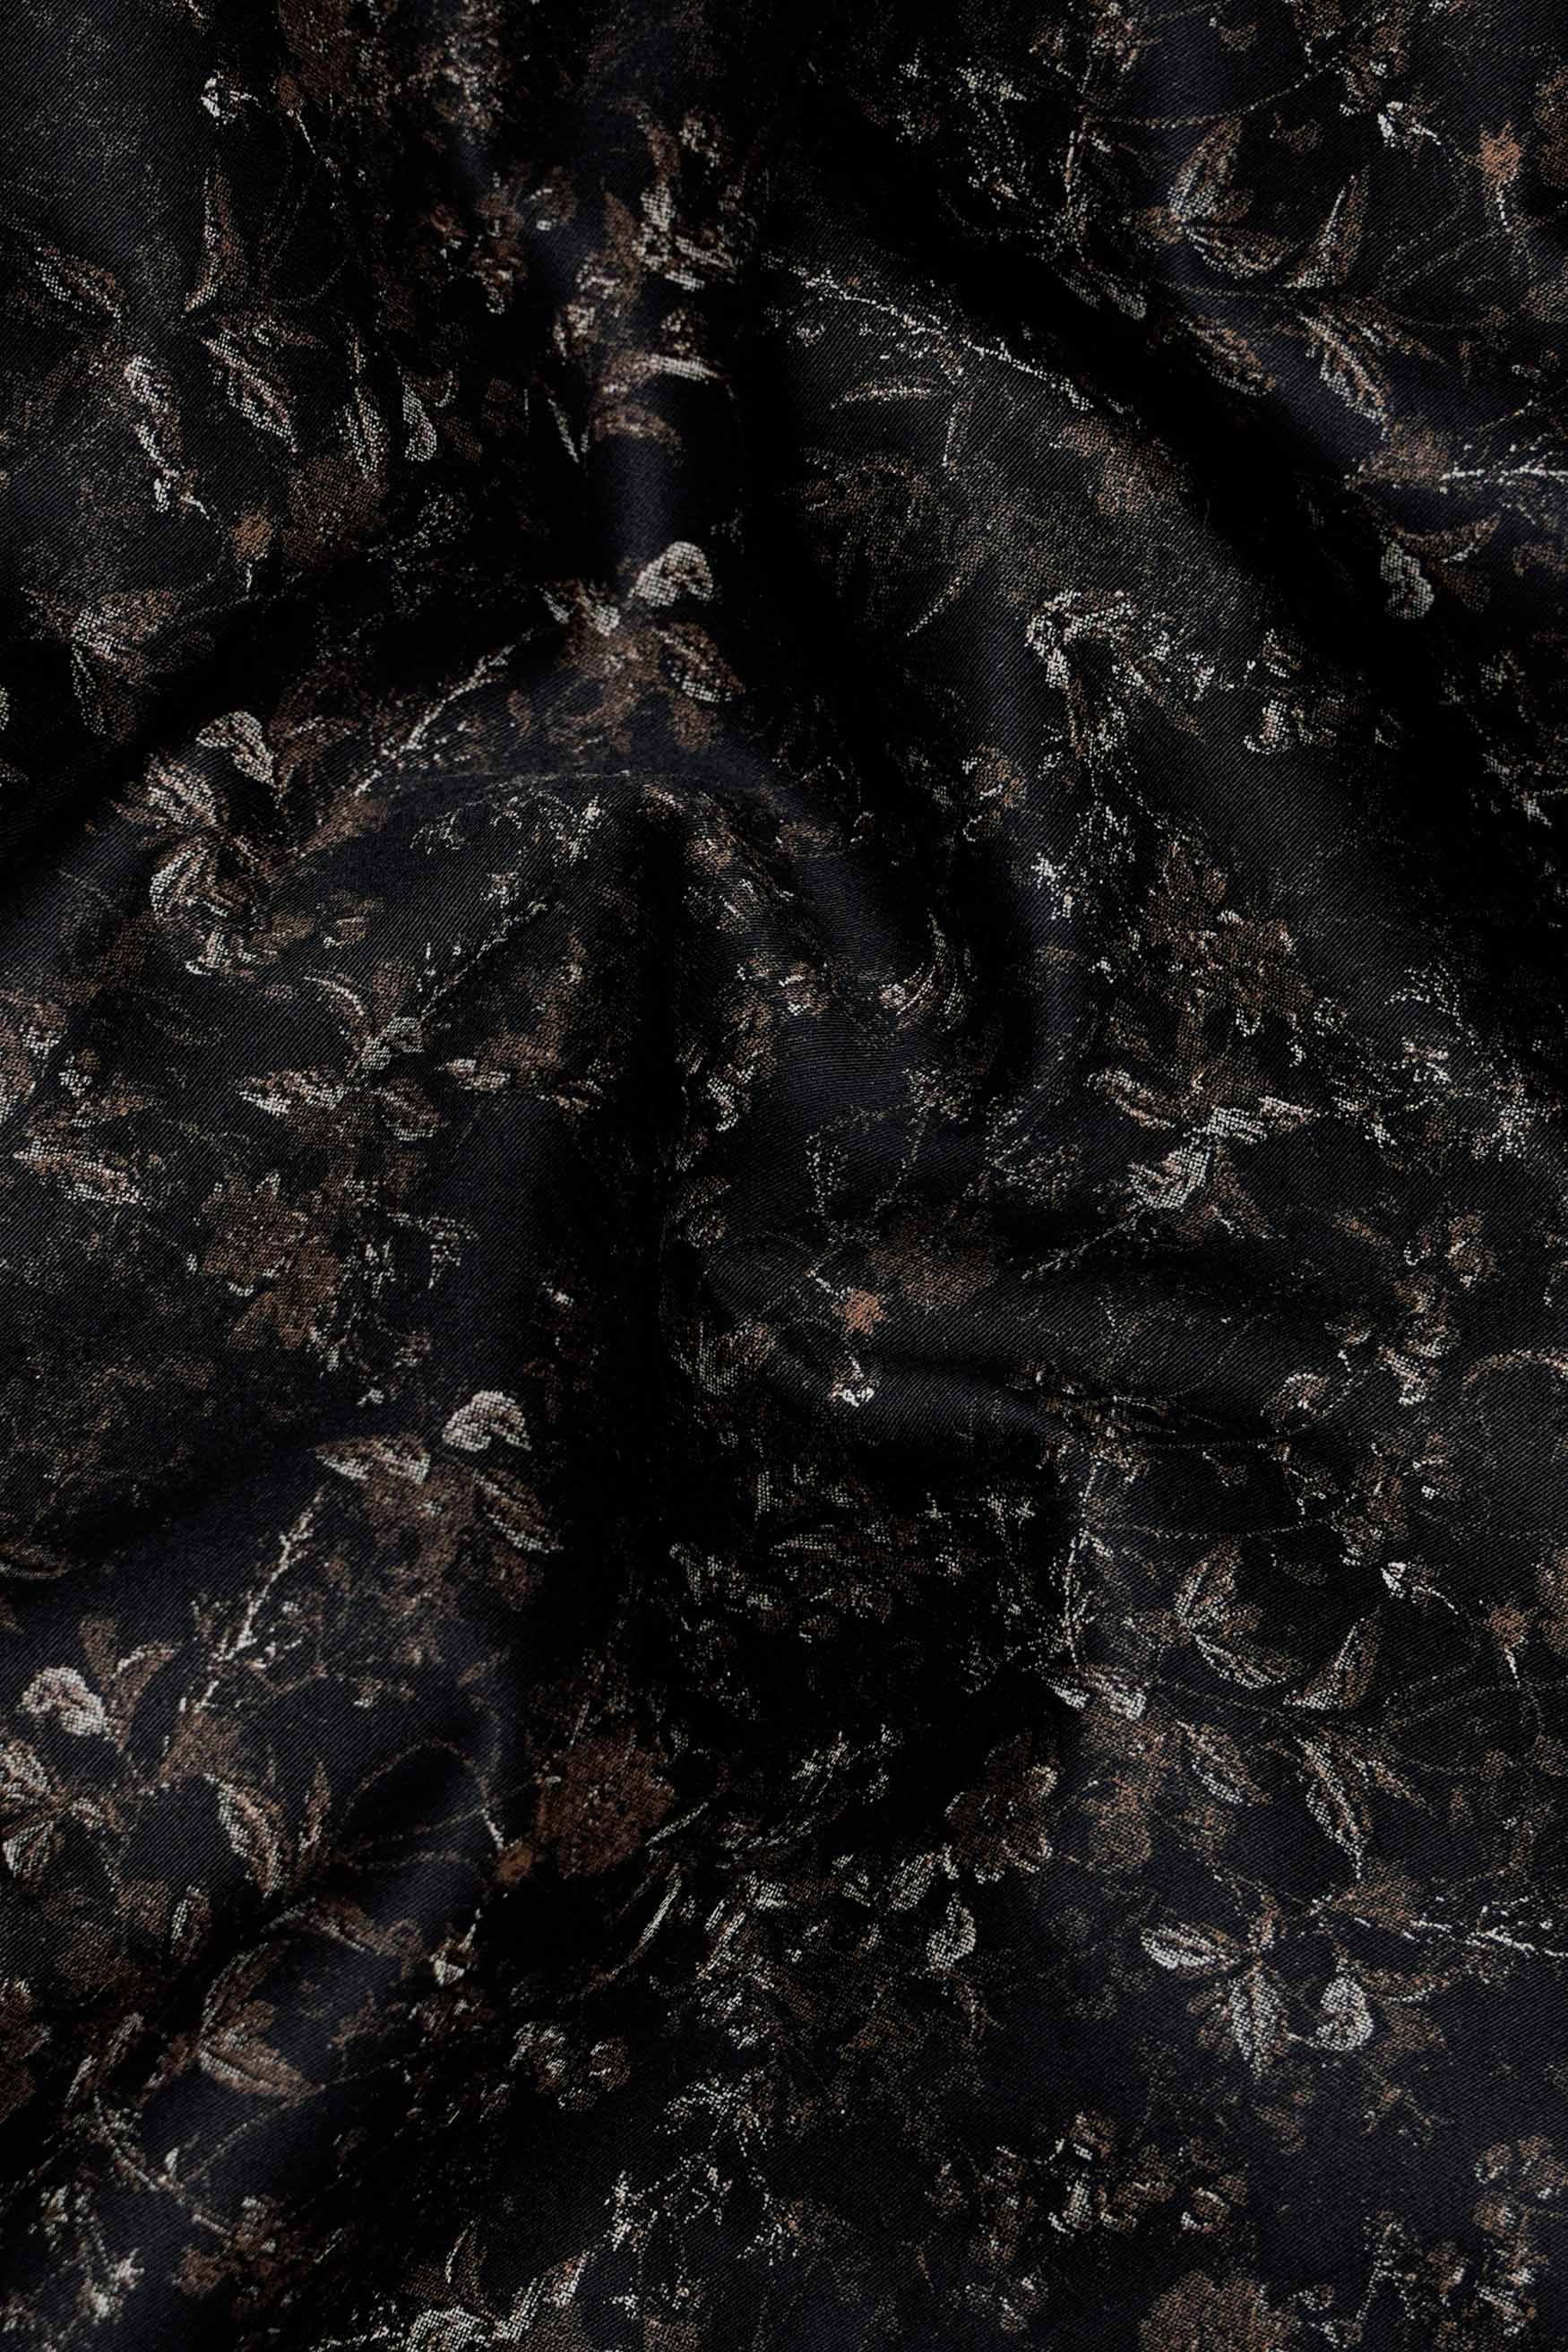 Jade Black with Birch Brown Floral Printed Subtle Sheen Super Soft Premium Cotton Shirt 11588-BLK-38, 11588-BLK-H-38, 11588-BLK-39, 11588-BLK-H-39, 11588-BLK-40, 11588-BLK-H-40, 11588-BLK-42, 11588-BLK-H-42, 11588-BLK-44, 11588-BLK-H-44, 11588-BLK-46, 11588-BLK-H-46, 11588-BLK-48, 11588-BLK-H-48, 11588-BLK-50, 11588-BLK-H-50, 11588-BLK-52, 11588-BLK-H-52